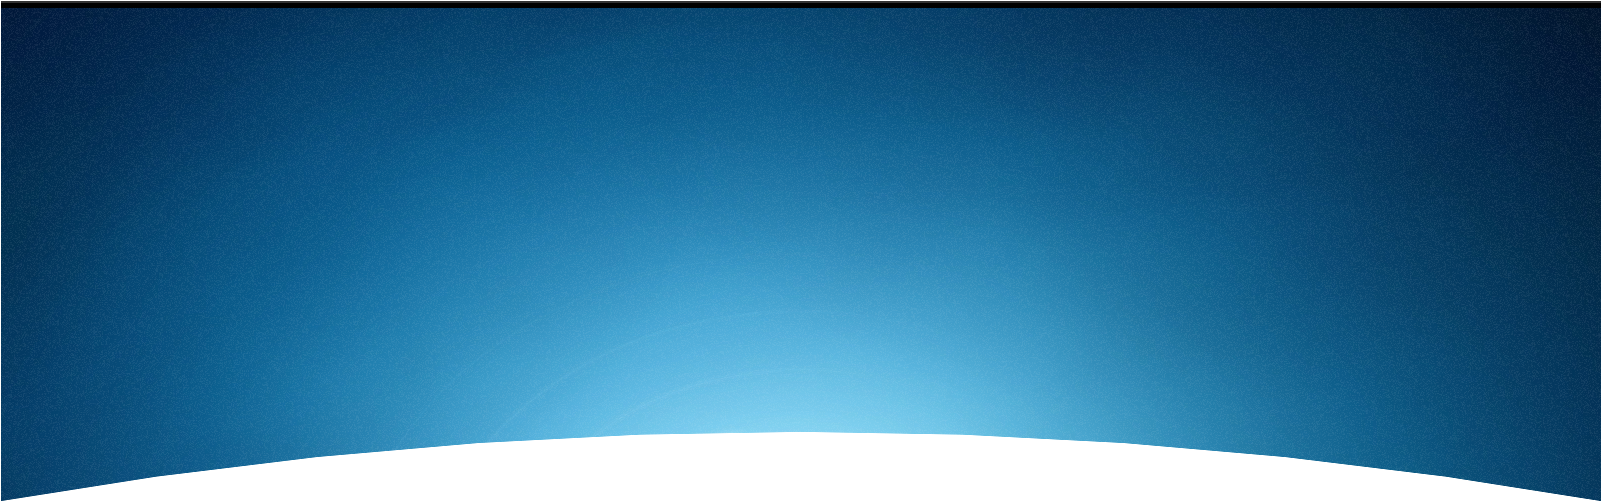 Premier Dobermans Raises Top-quality European - Website Header Image Png (1600x647), Png Download